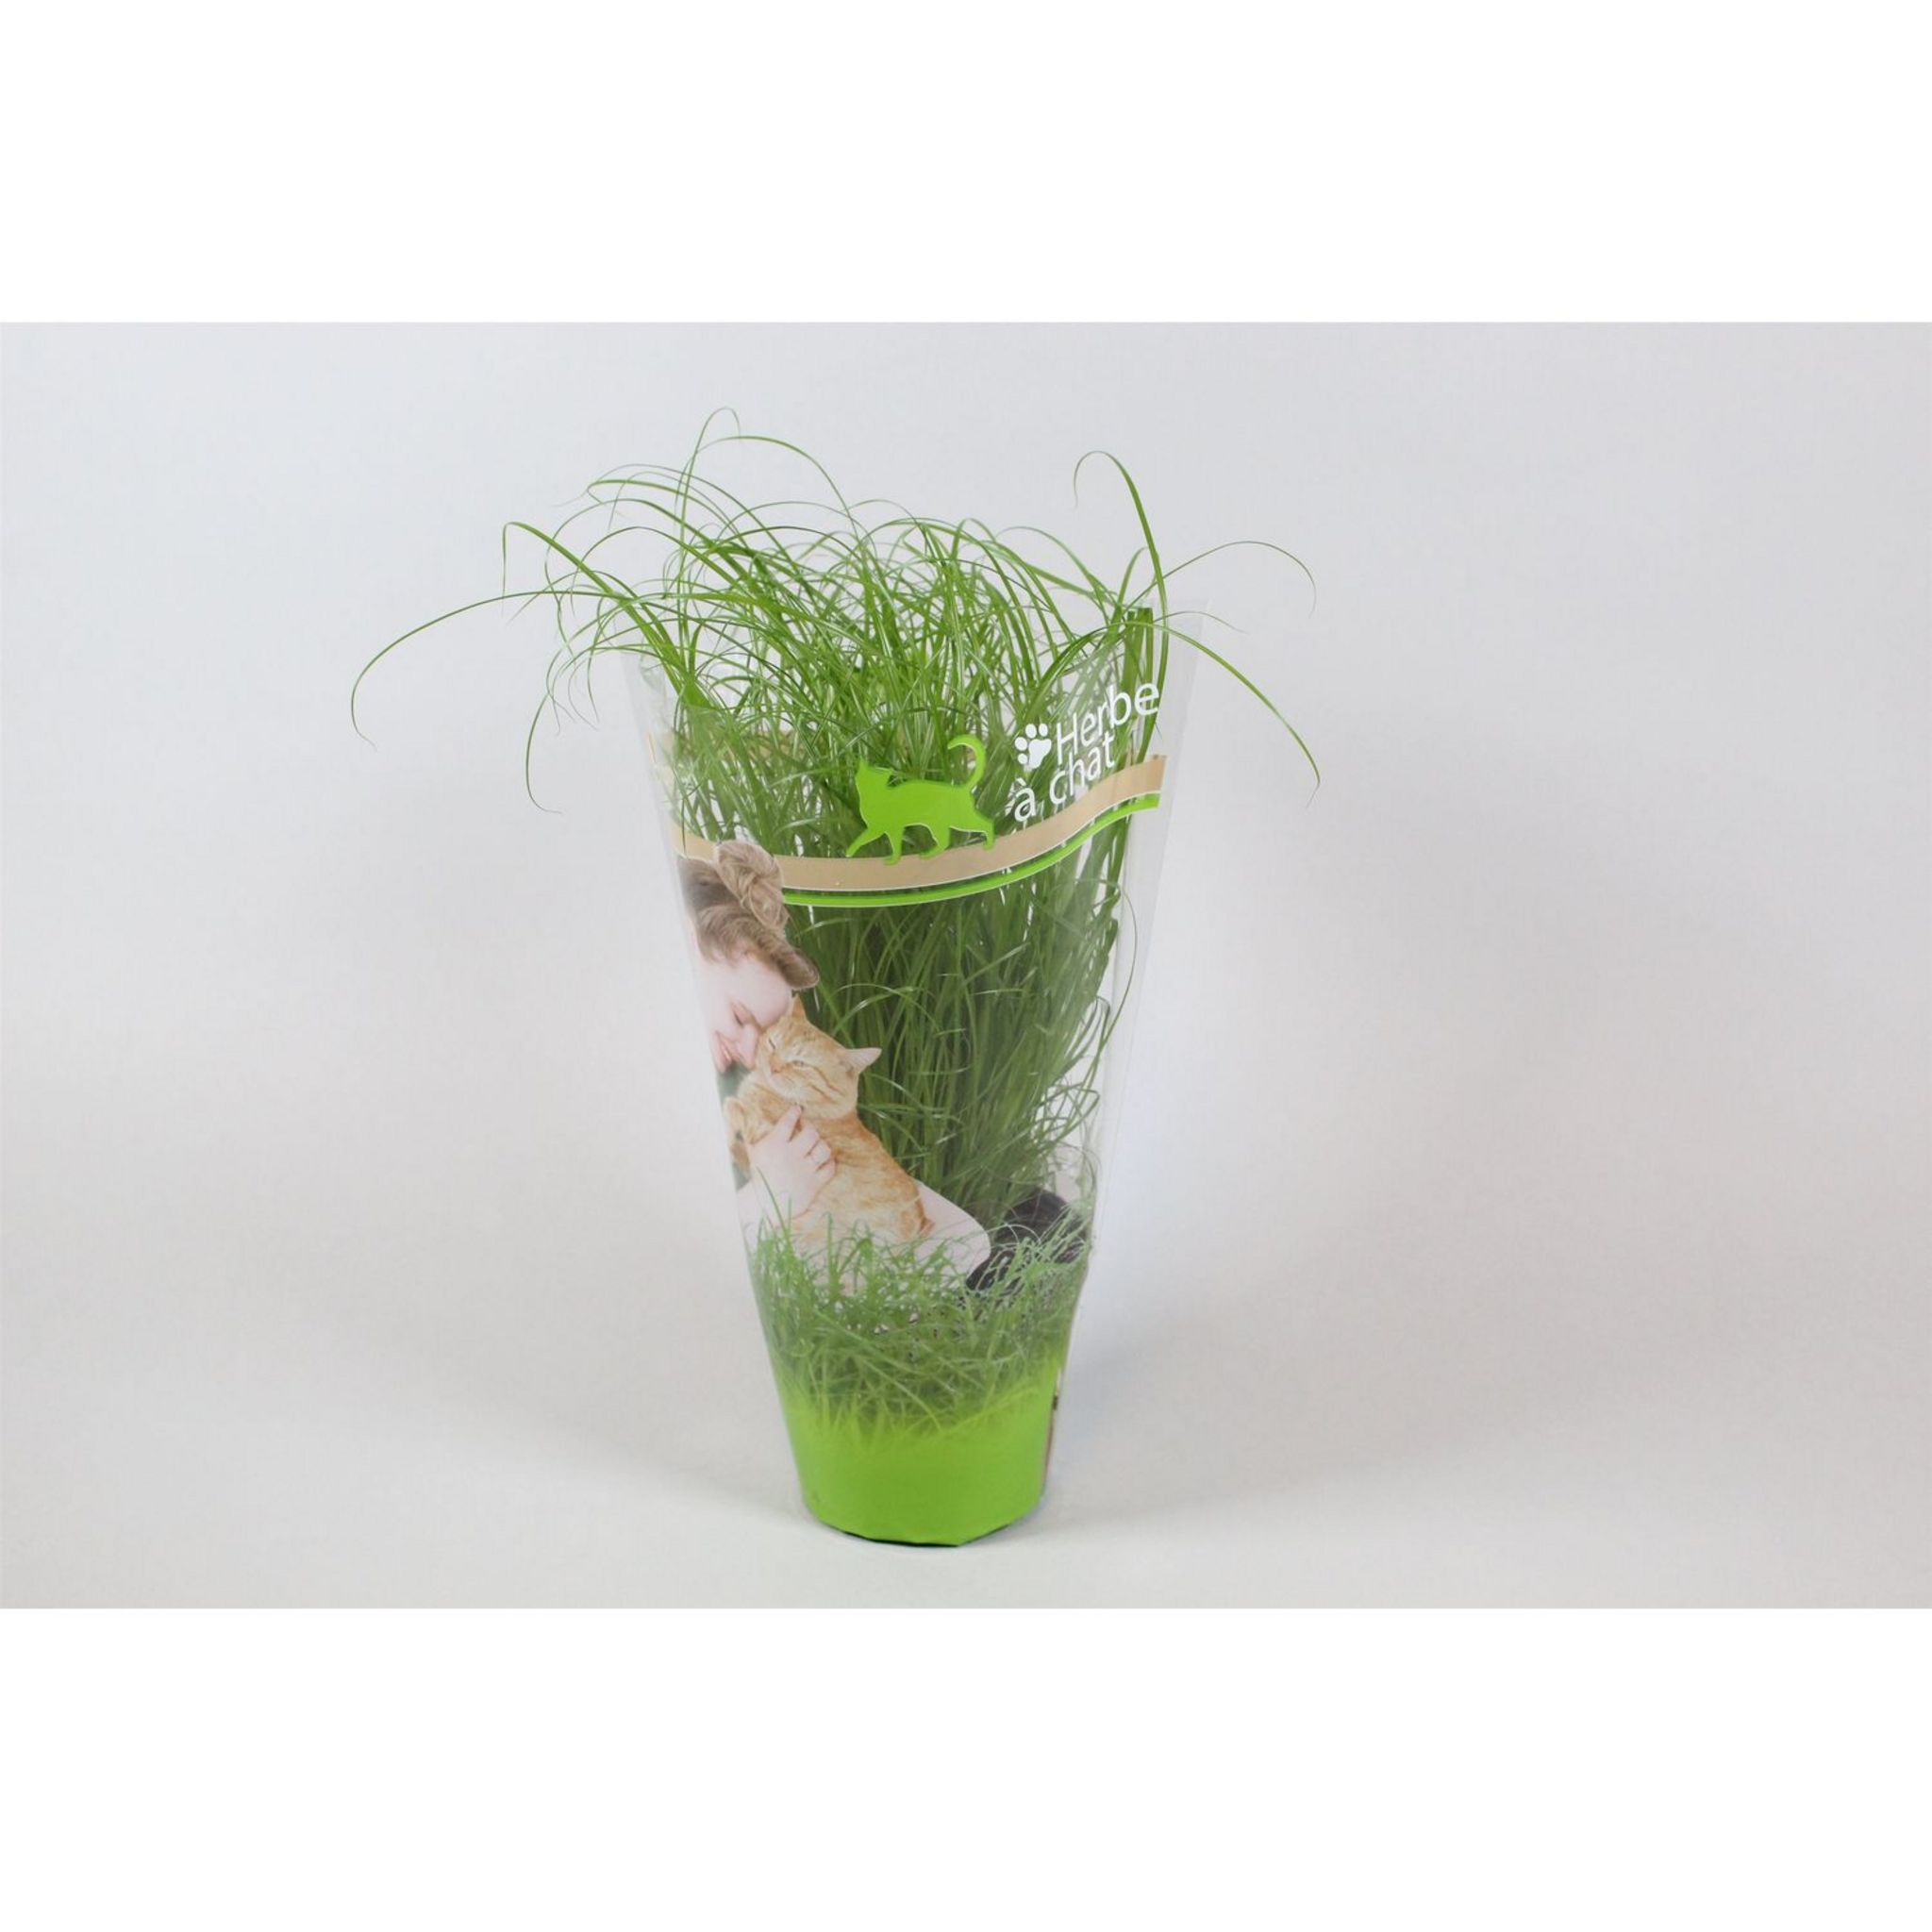 Herbe à chat BIO pot de 10,5cm - Gamm vert